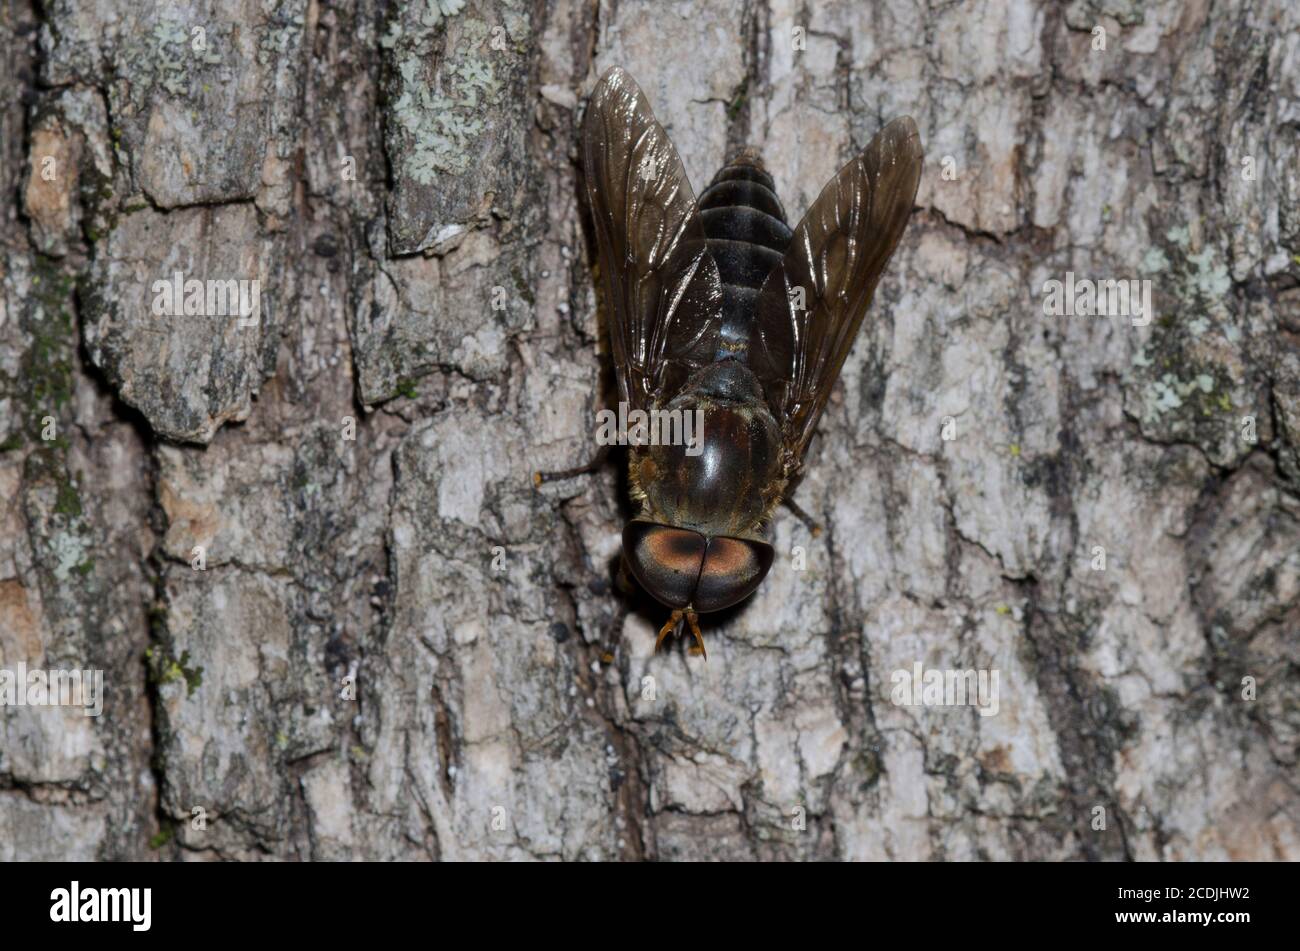 Horse Fly, Tabanus sp., male Stock Photo